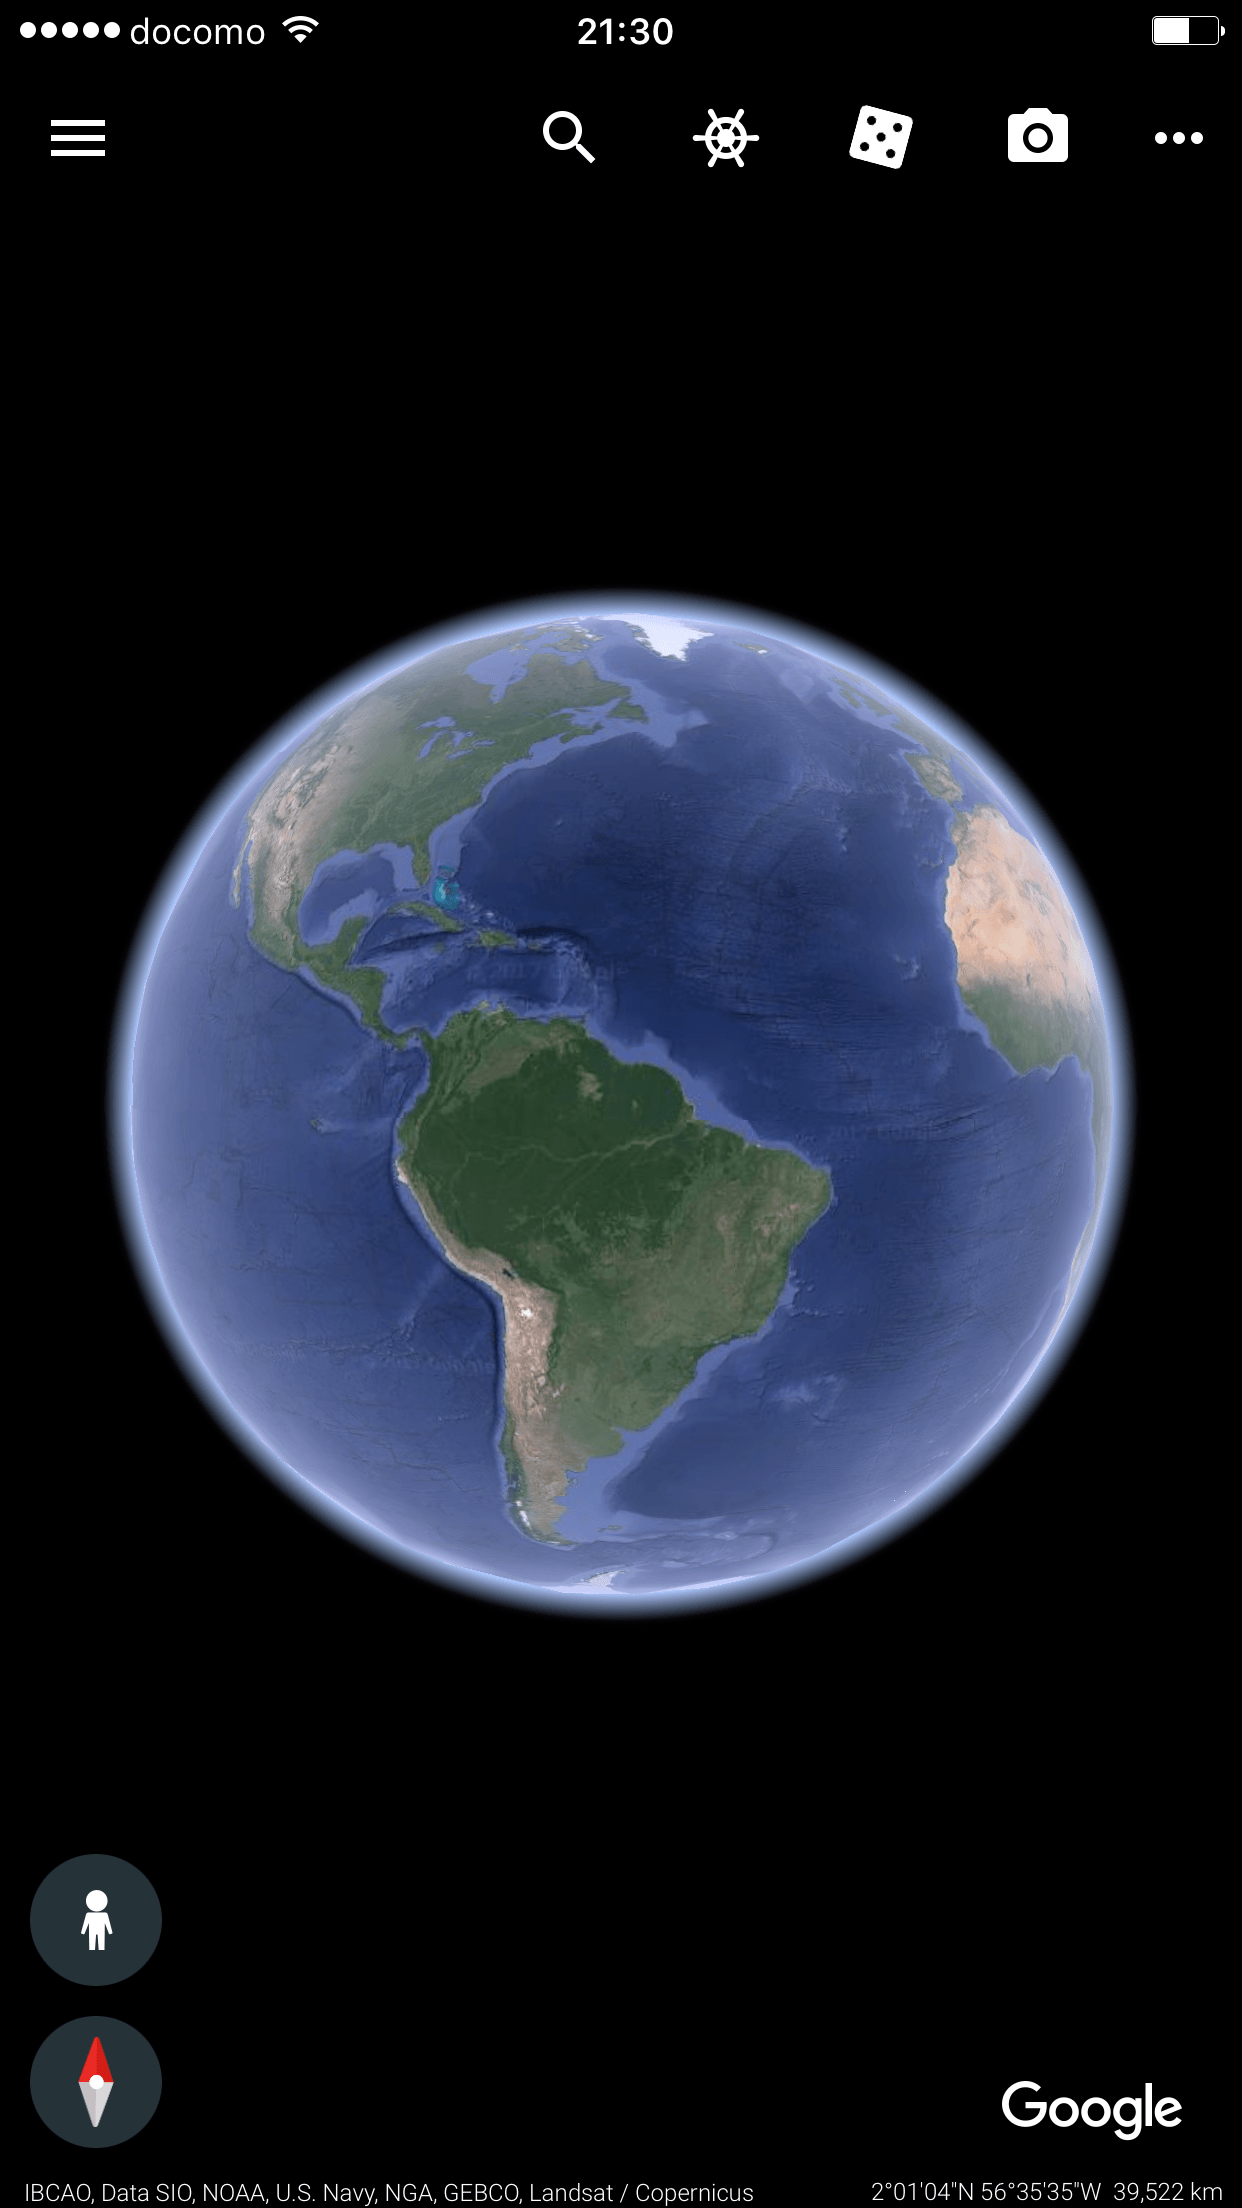 【Google Earth】夏の旅行の下調べにも！ 大幅アップデートされたアプリで世界中のスポットを探検